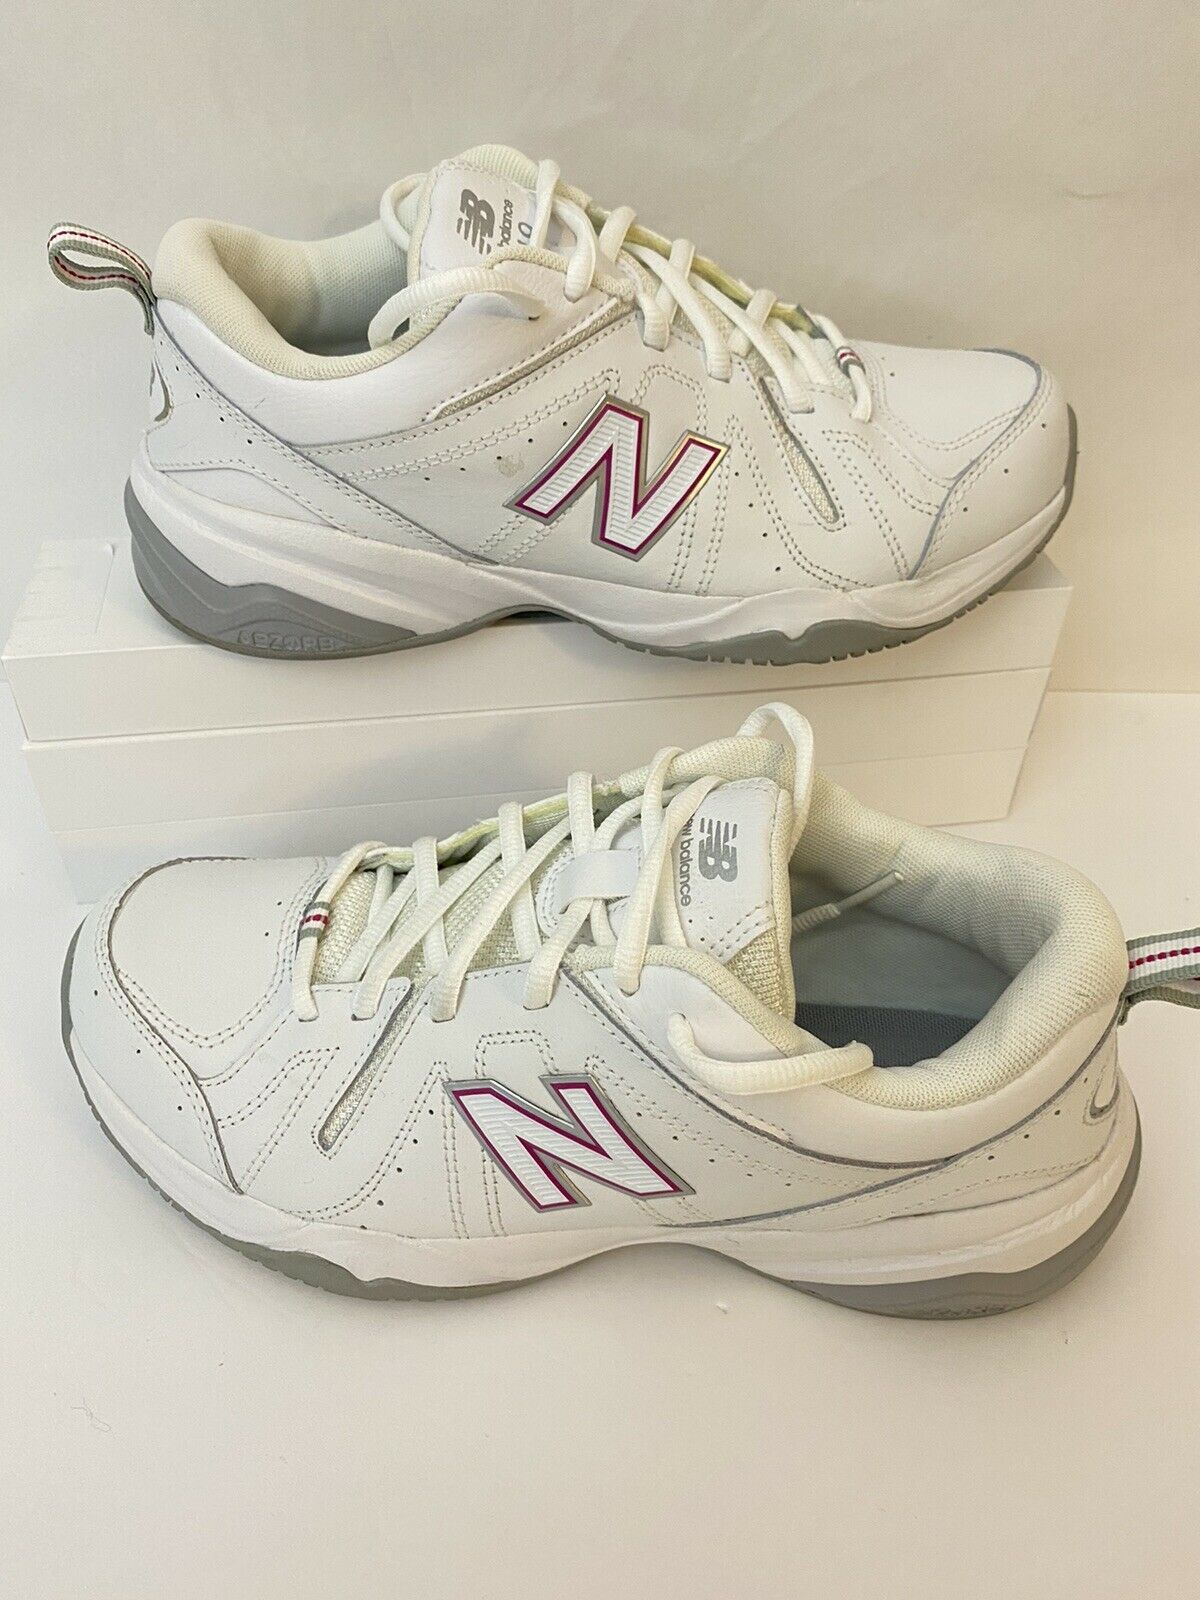 New Balance 619 Womens Size 8.5 Running Walking Shoes White Pink WX619WP Mint Co